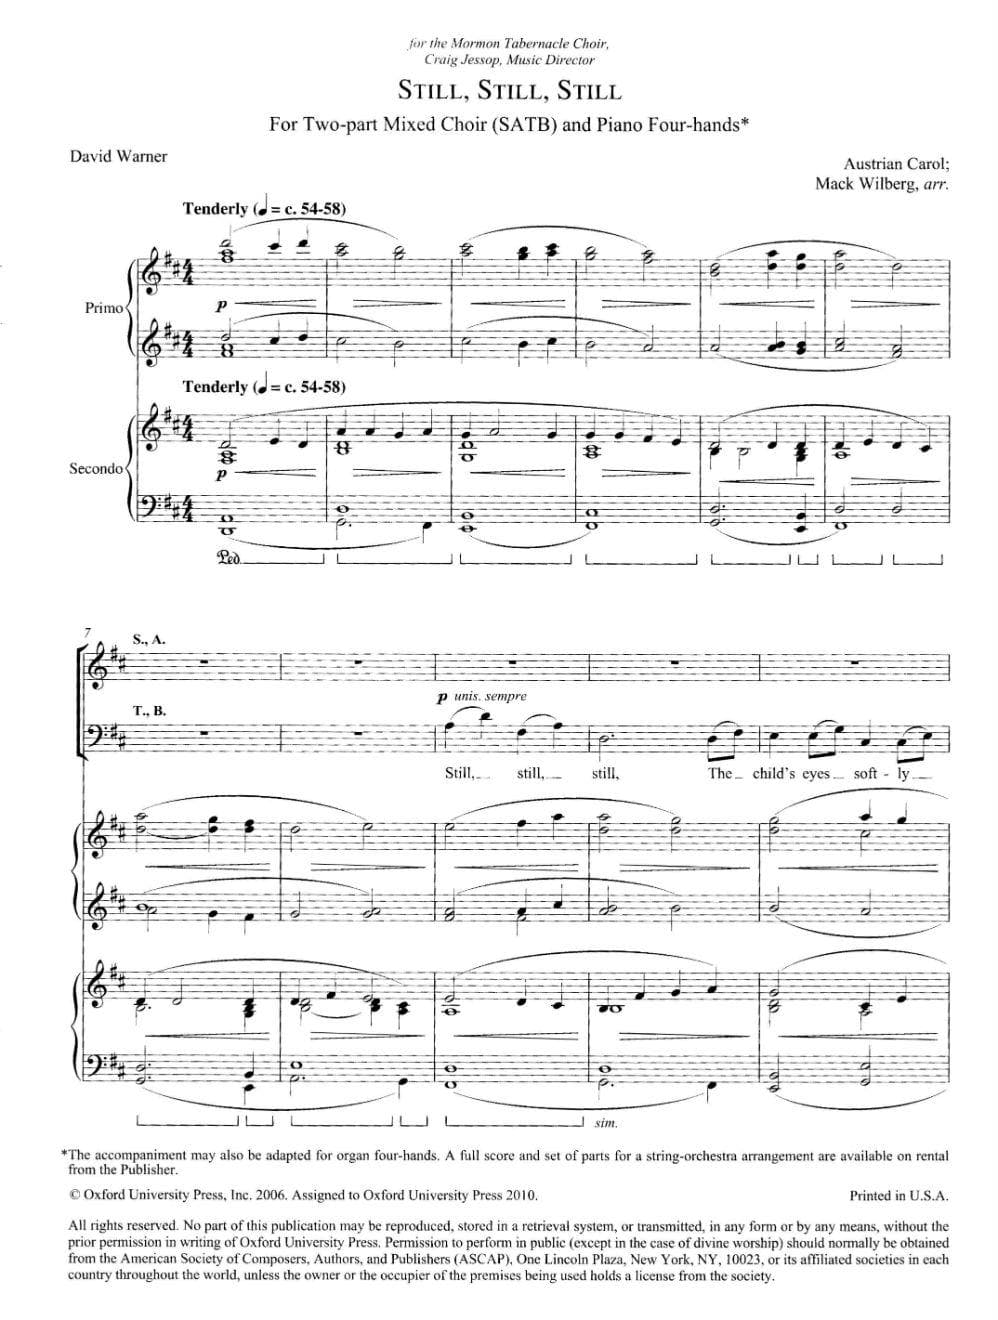 Wilberg - Still, Still, Still For 2-part choir & String Orchestra Published by Oxford University Press